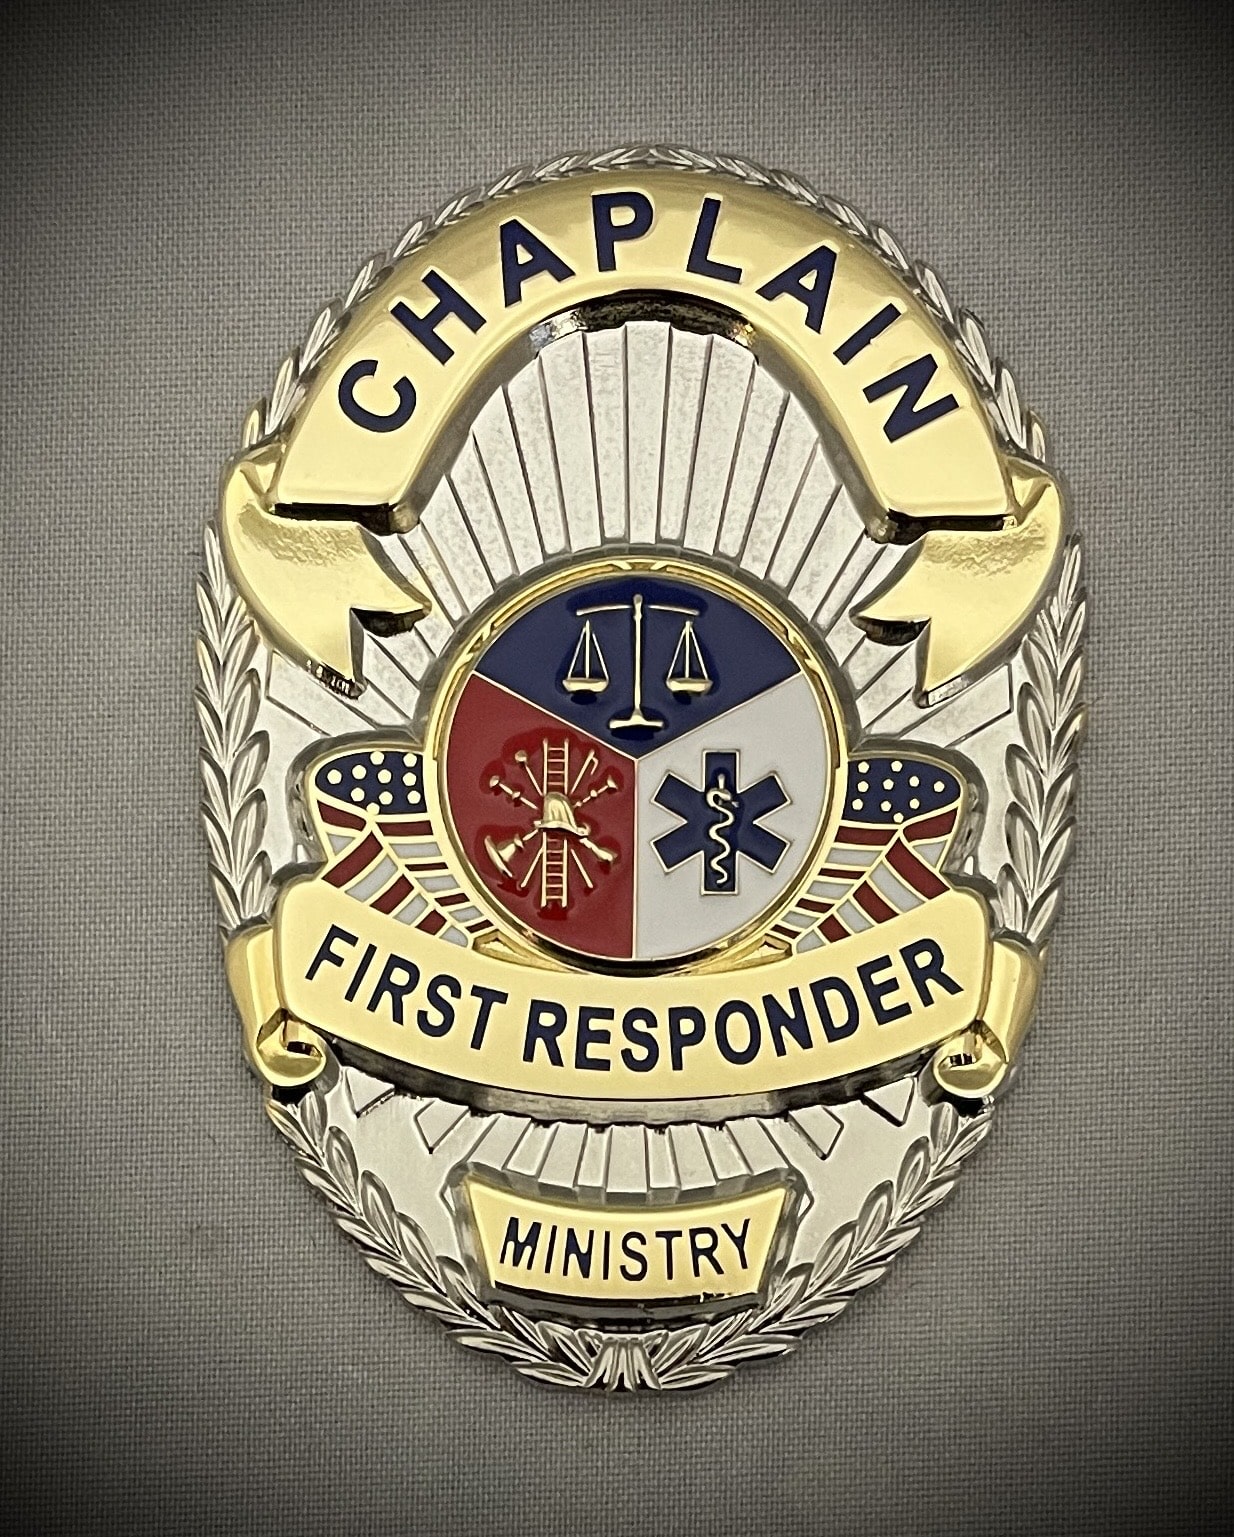 Chaplain First Responder